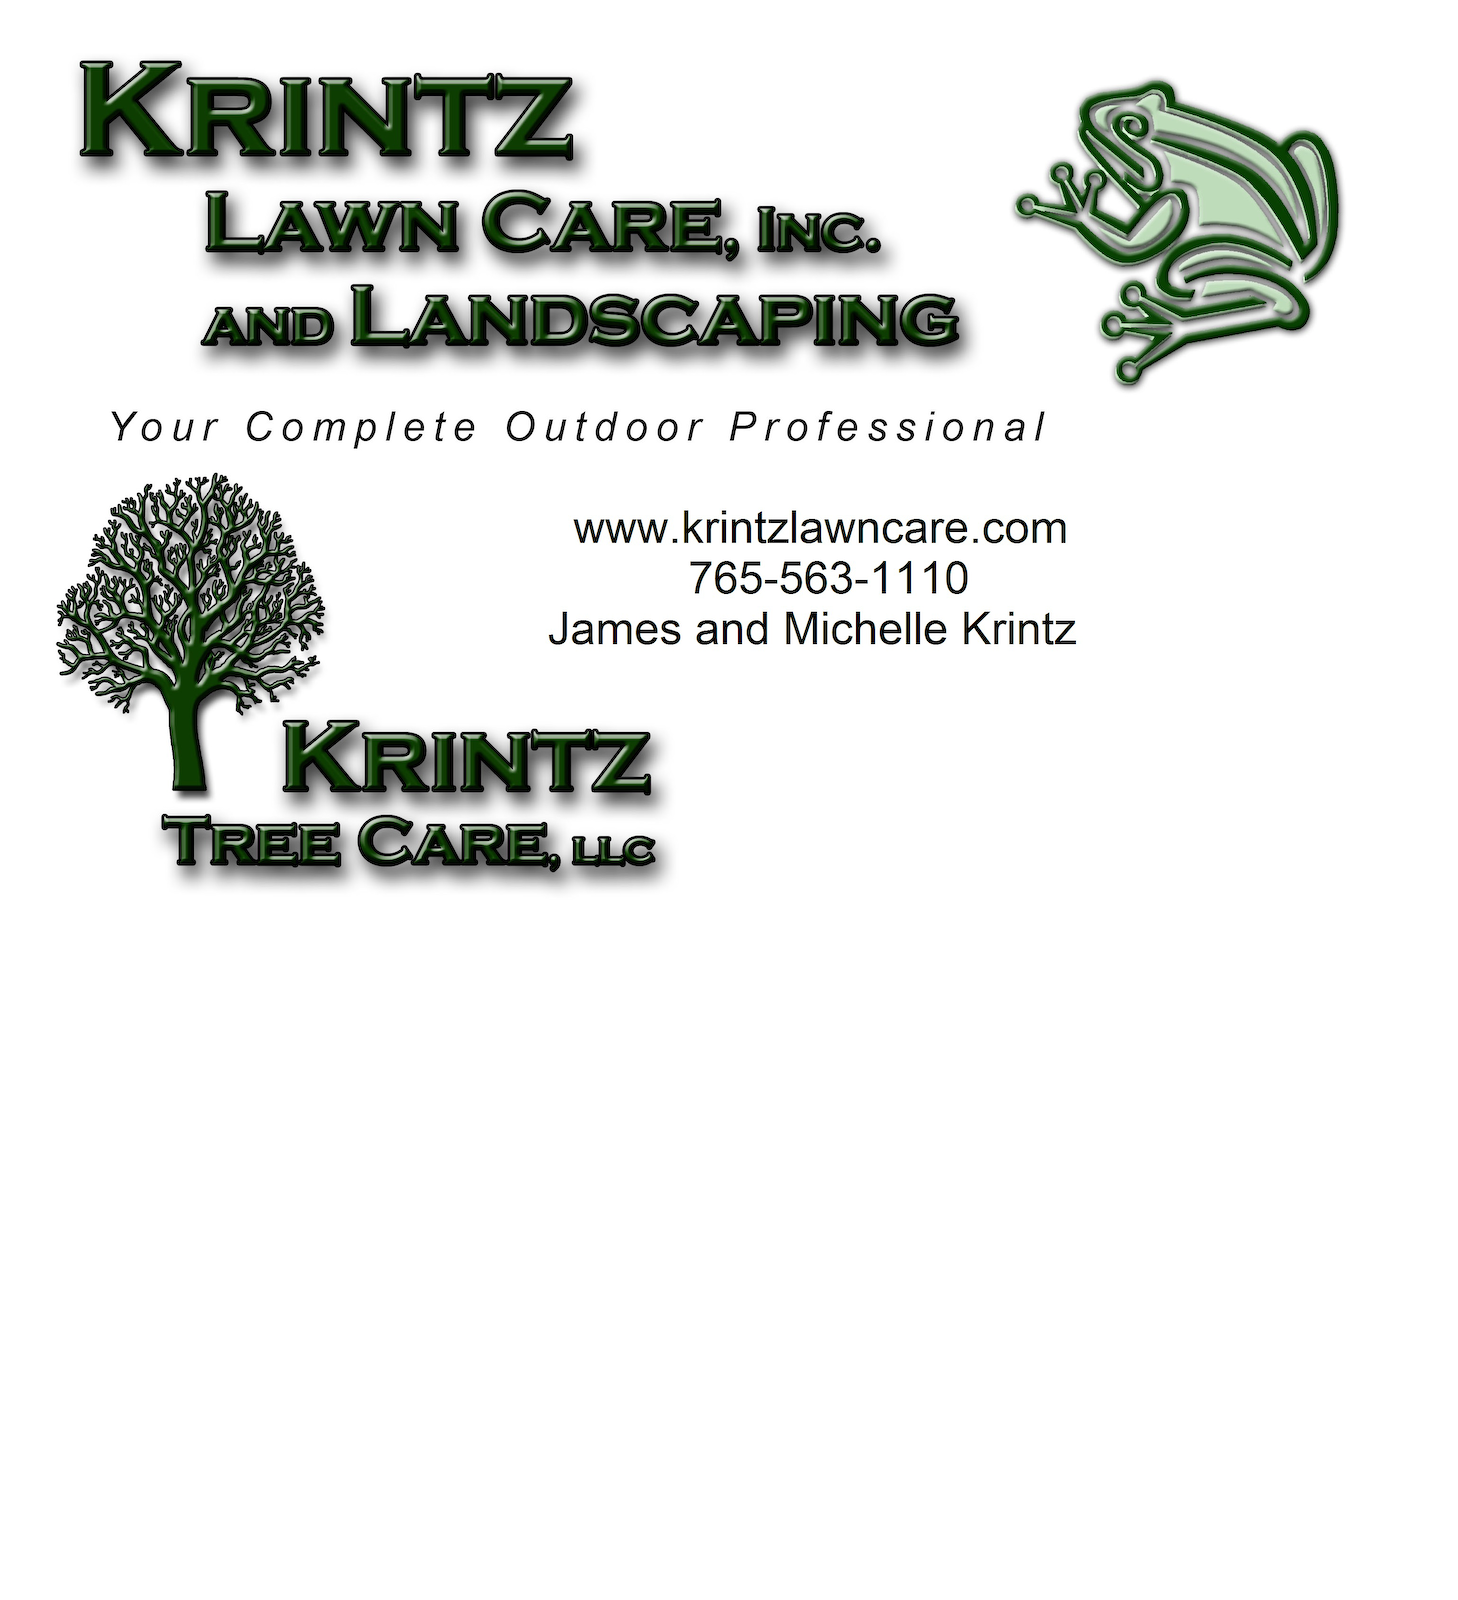 Krintz Lawn Care